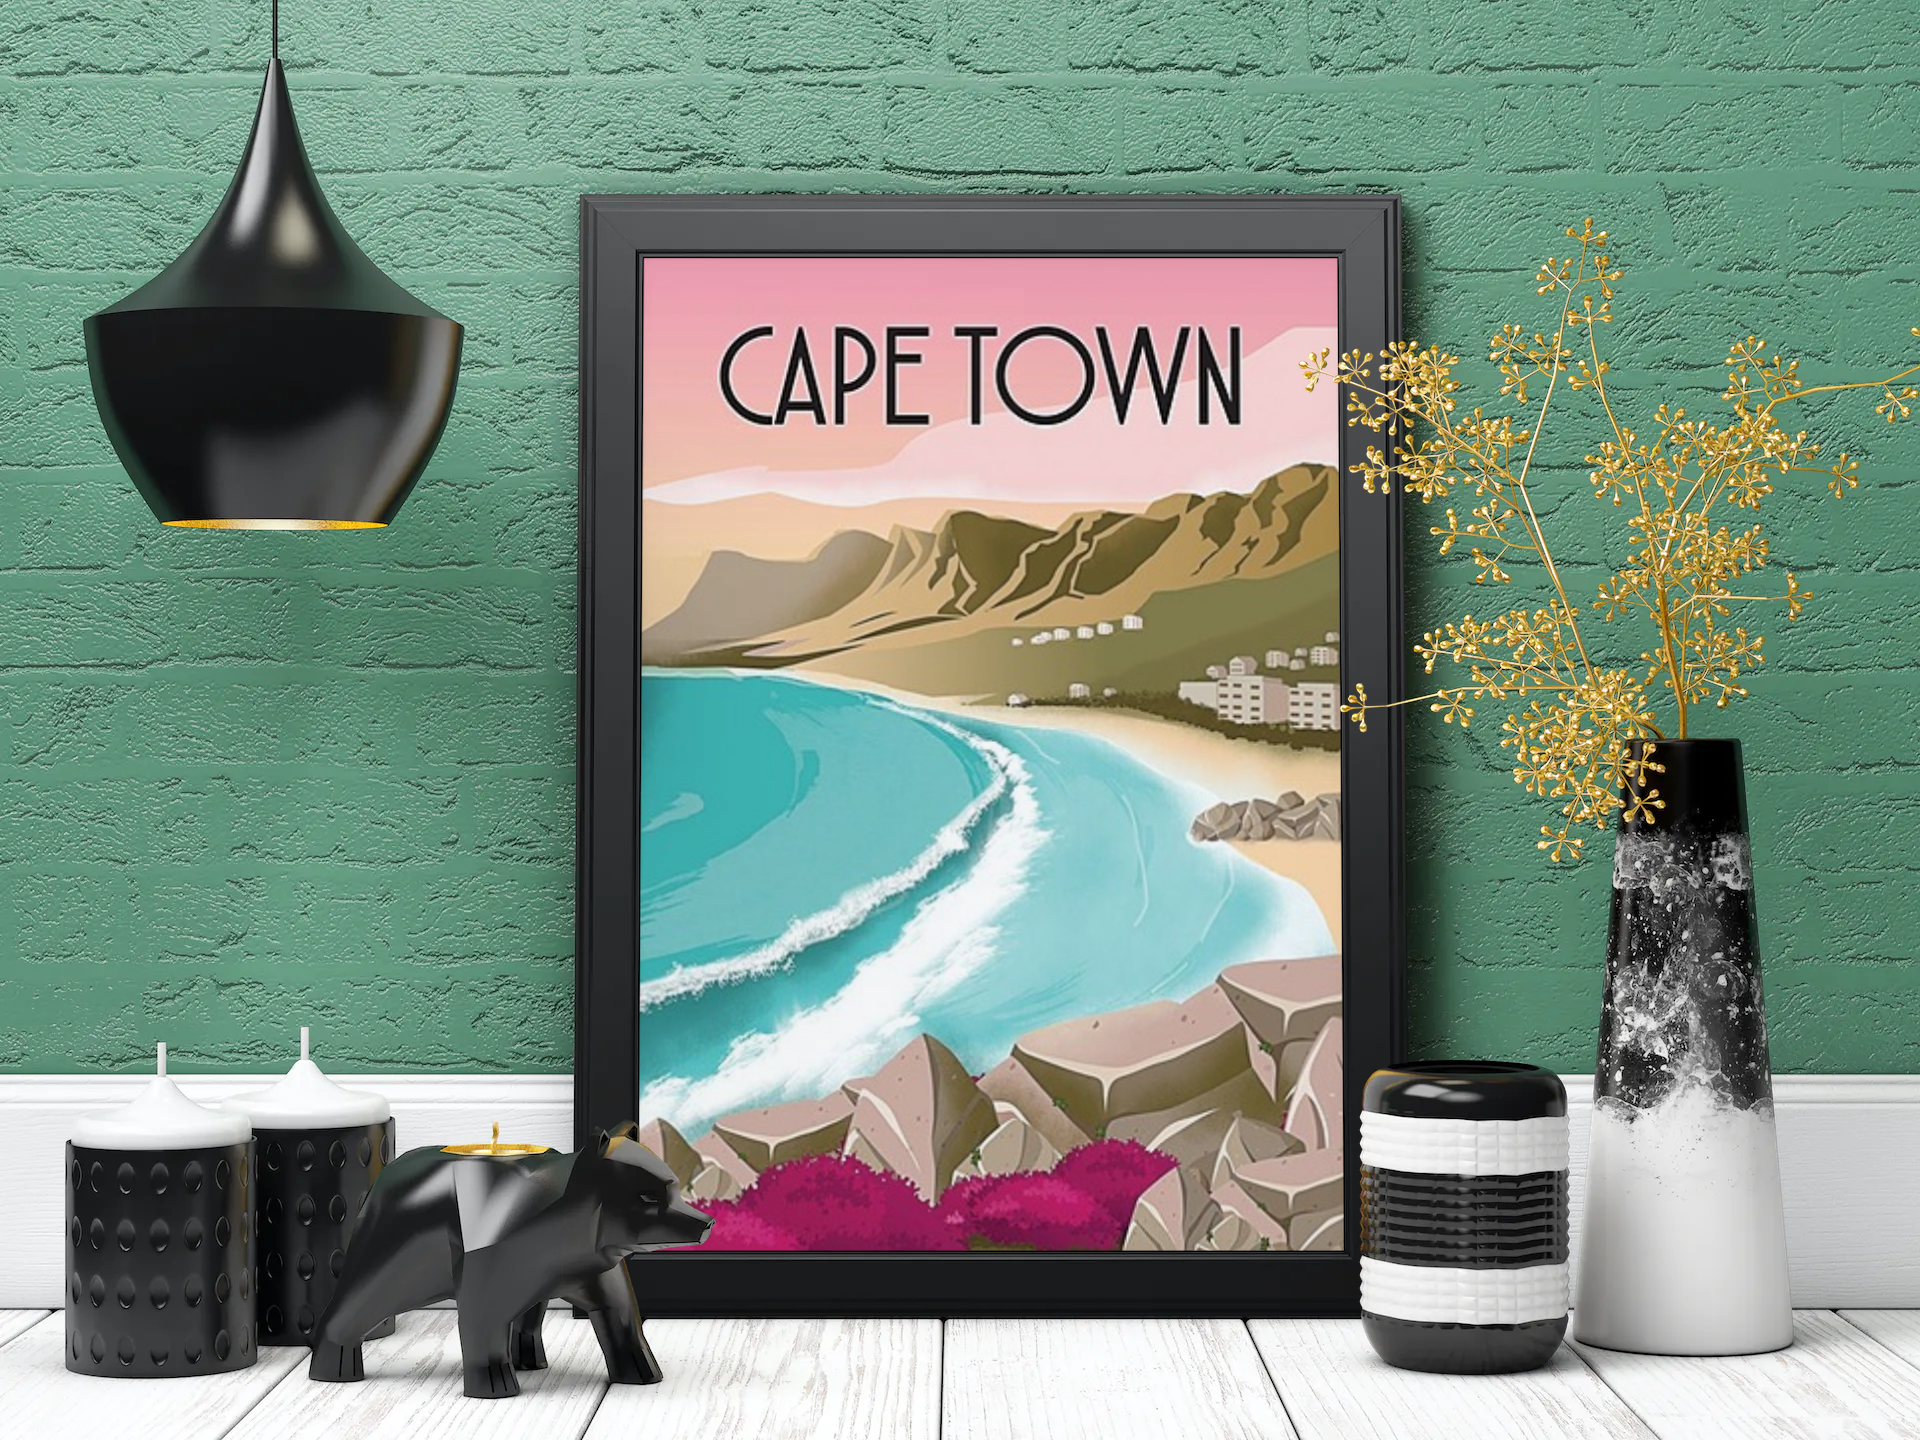 Vintage Cape Town Beach Travel Art Painting